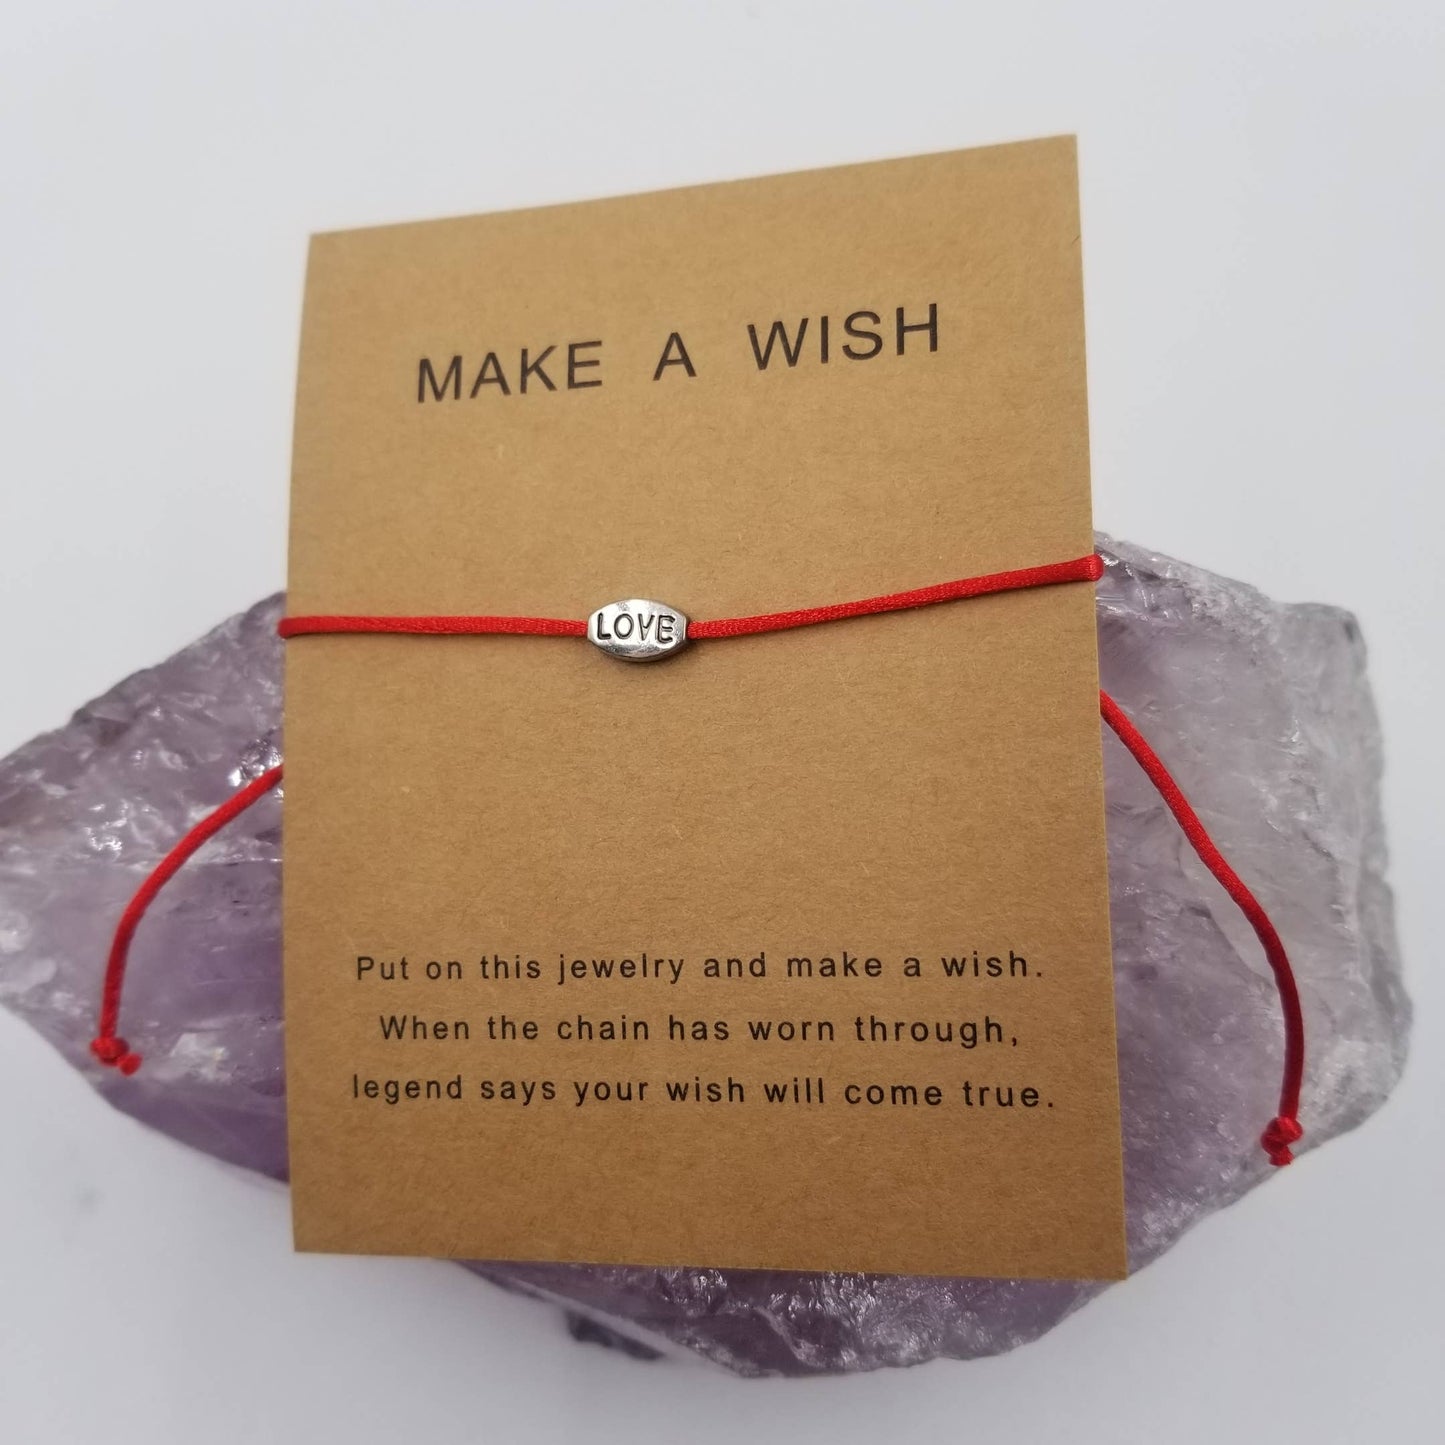 MAKE A WISH LOVE Bracelet - Valentine's Day: Red